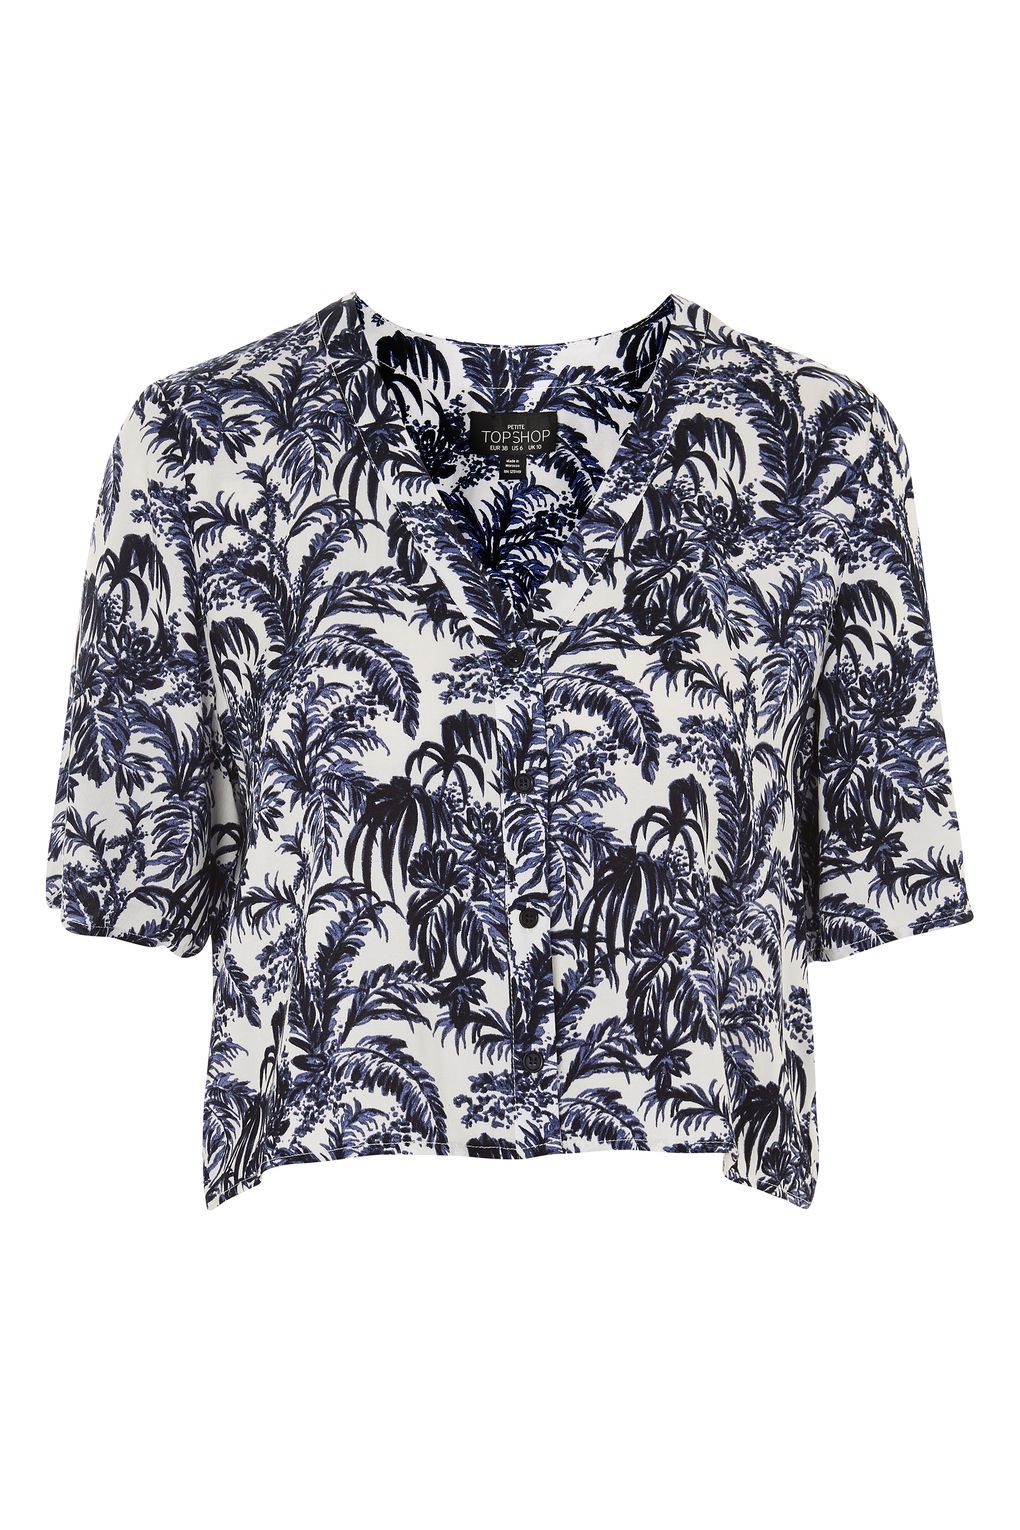 Camisas hawaianas: palmeras